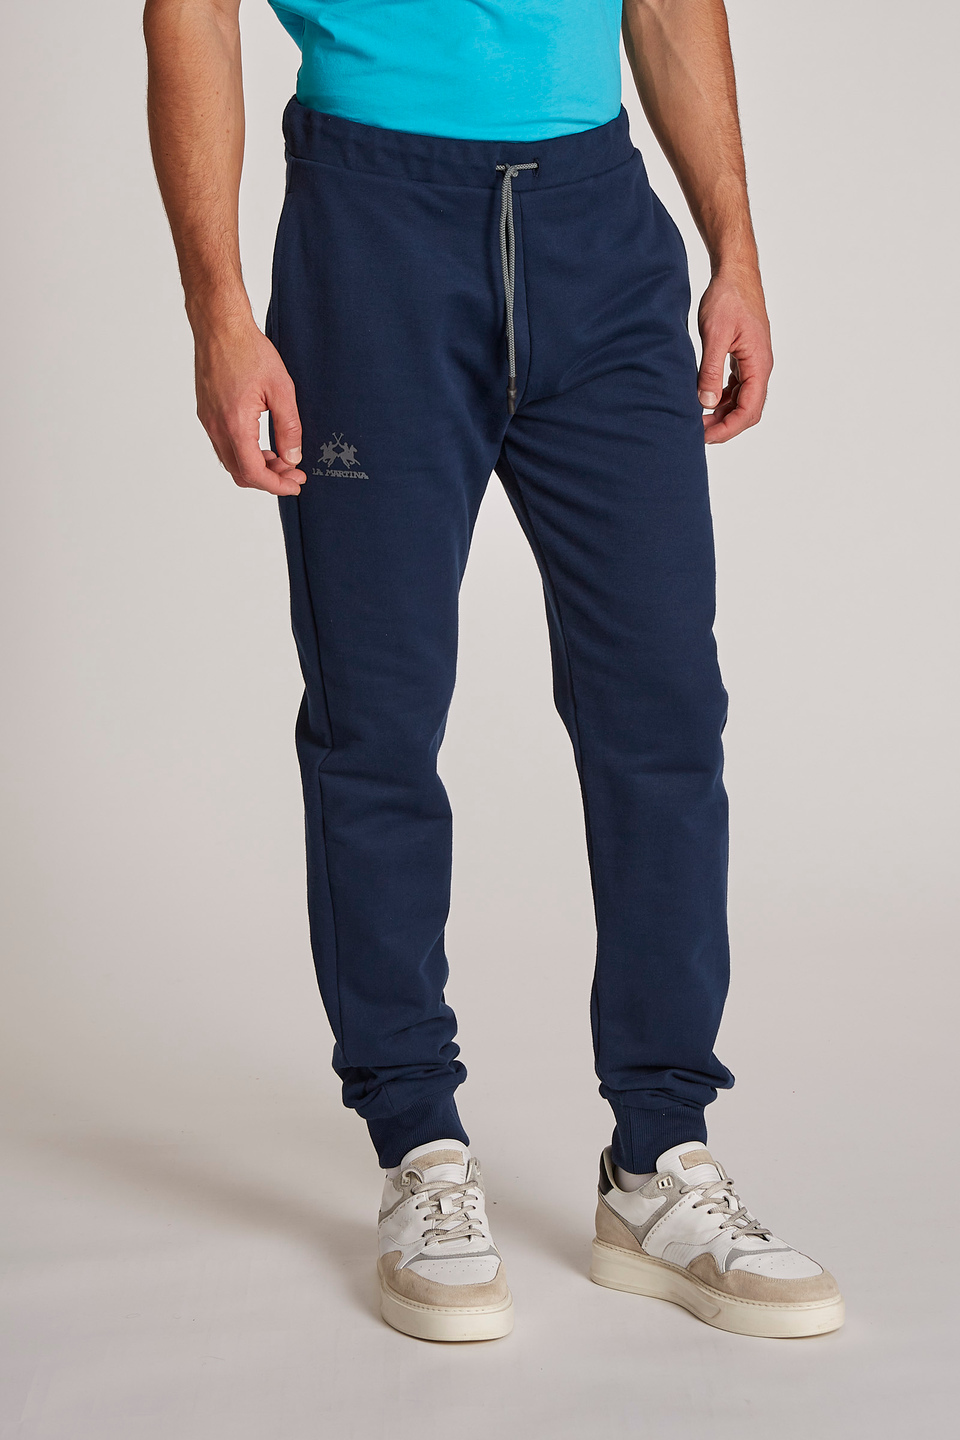 Men's jogging trousers in a regular fit - Paco | La Martina - Official Online Shop